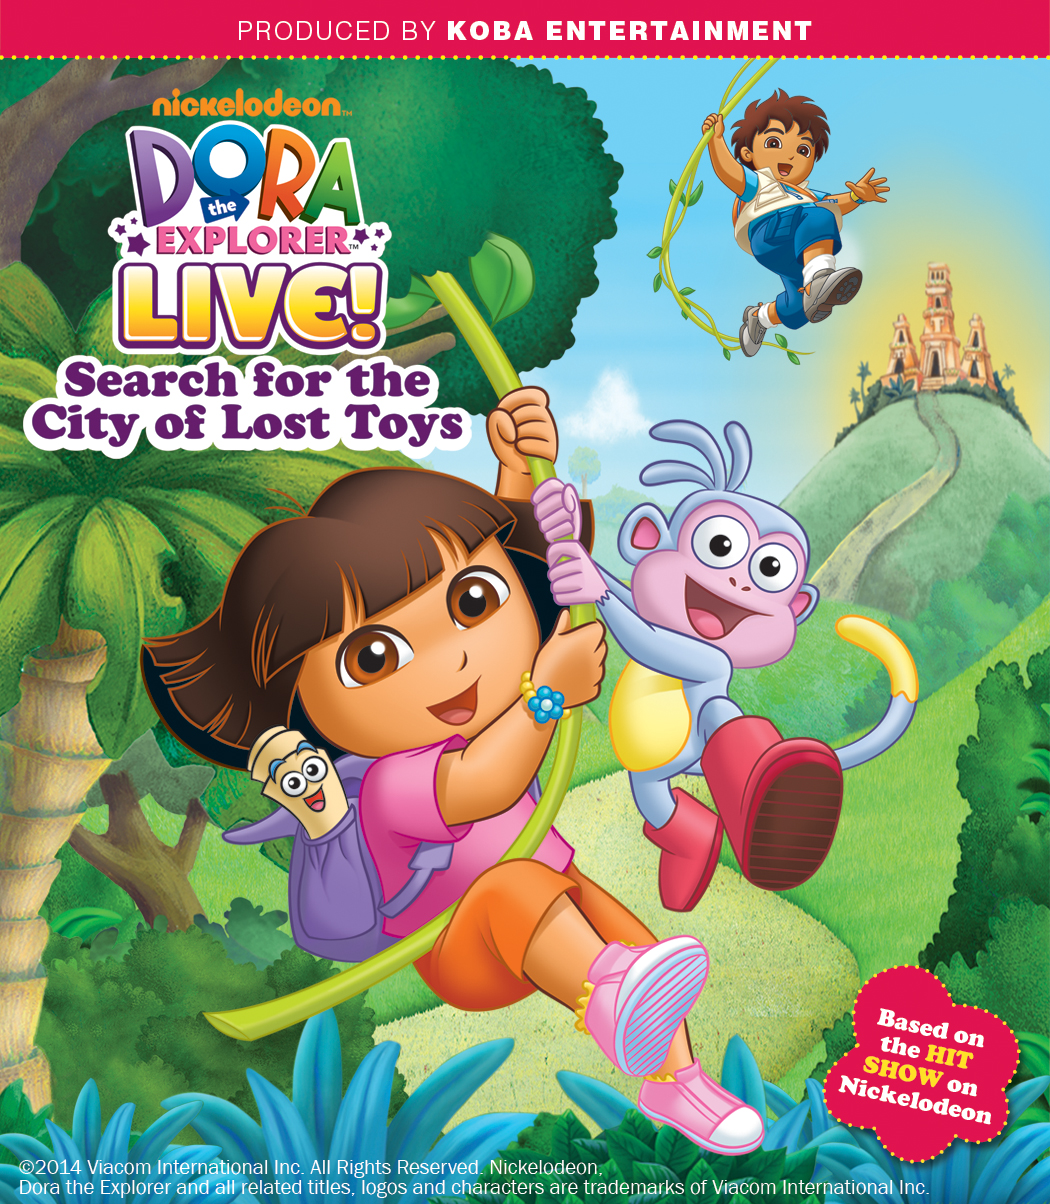 Dora The Explorer Live Show in London